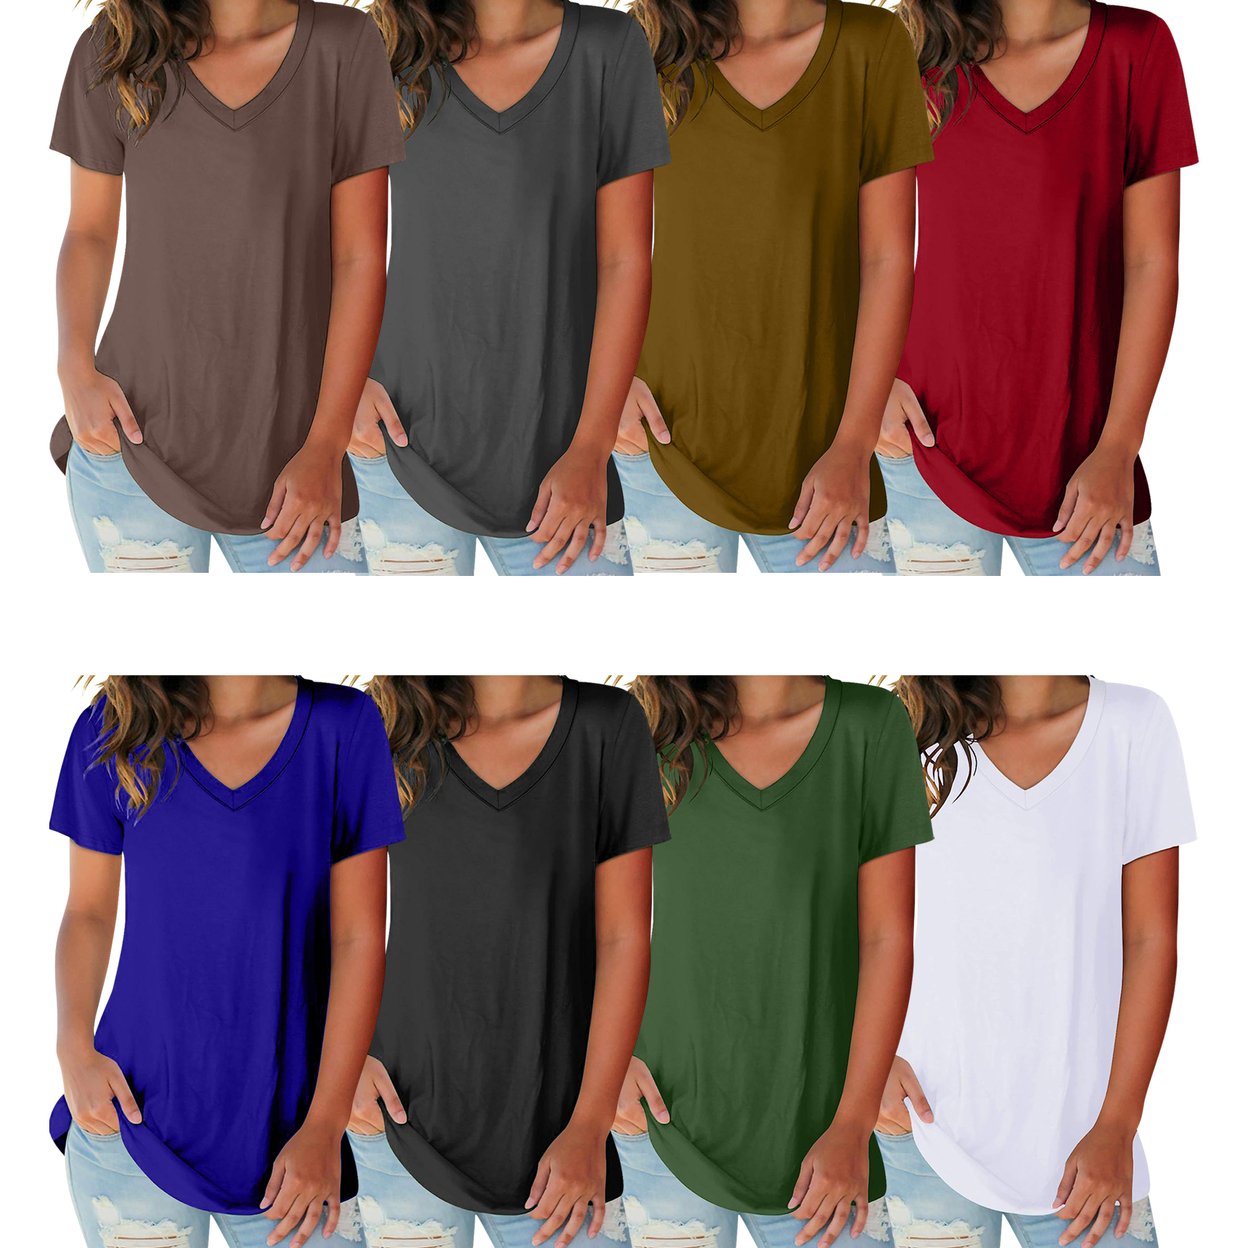 Women's Ultra-Soft Smooth Cotton Blend Basic V-Neck Short Sleeve Shirts - Green, Xx-large